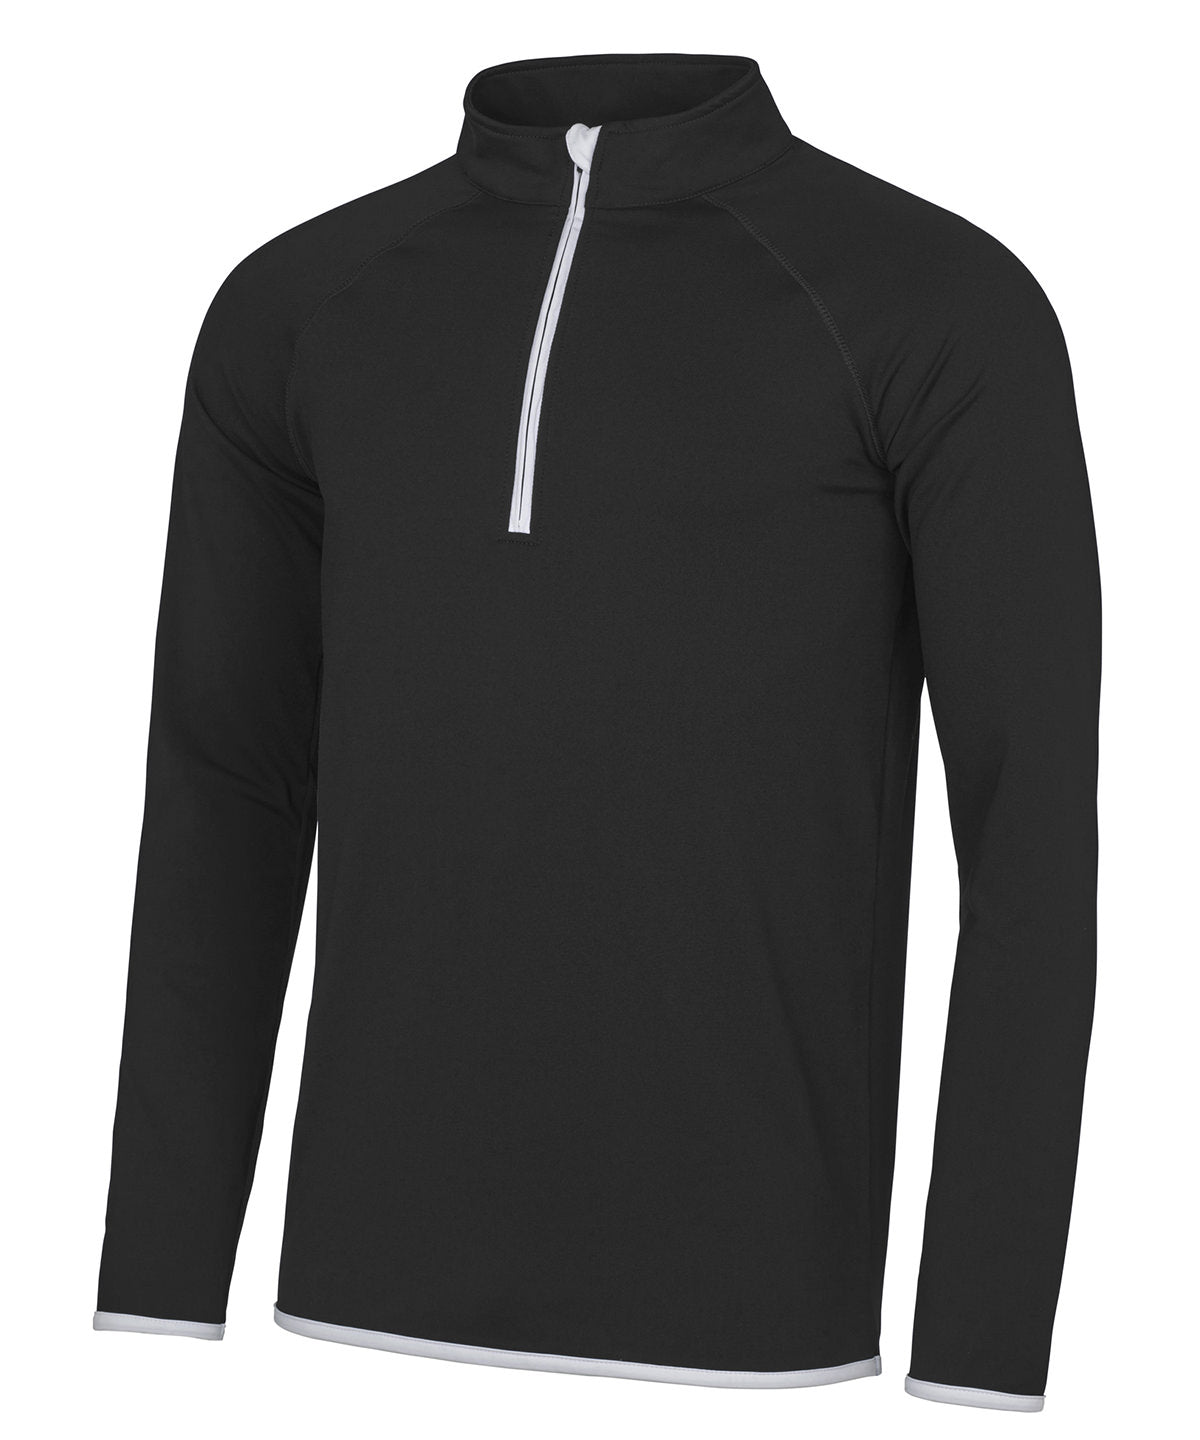 Cool ½ zip sweatshirt | Jet Black/Arctic White